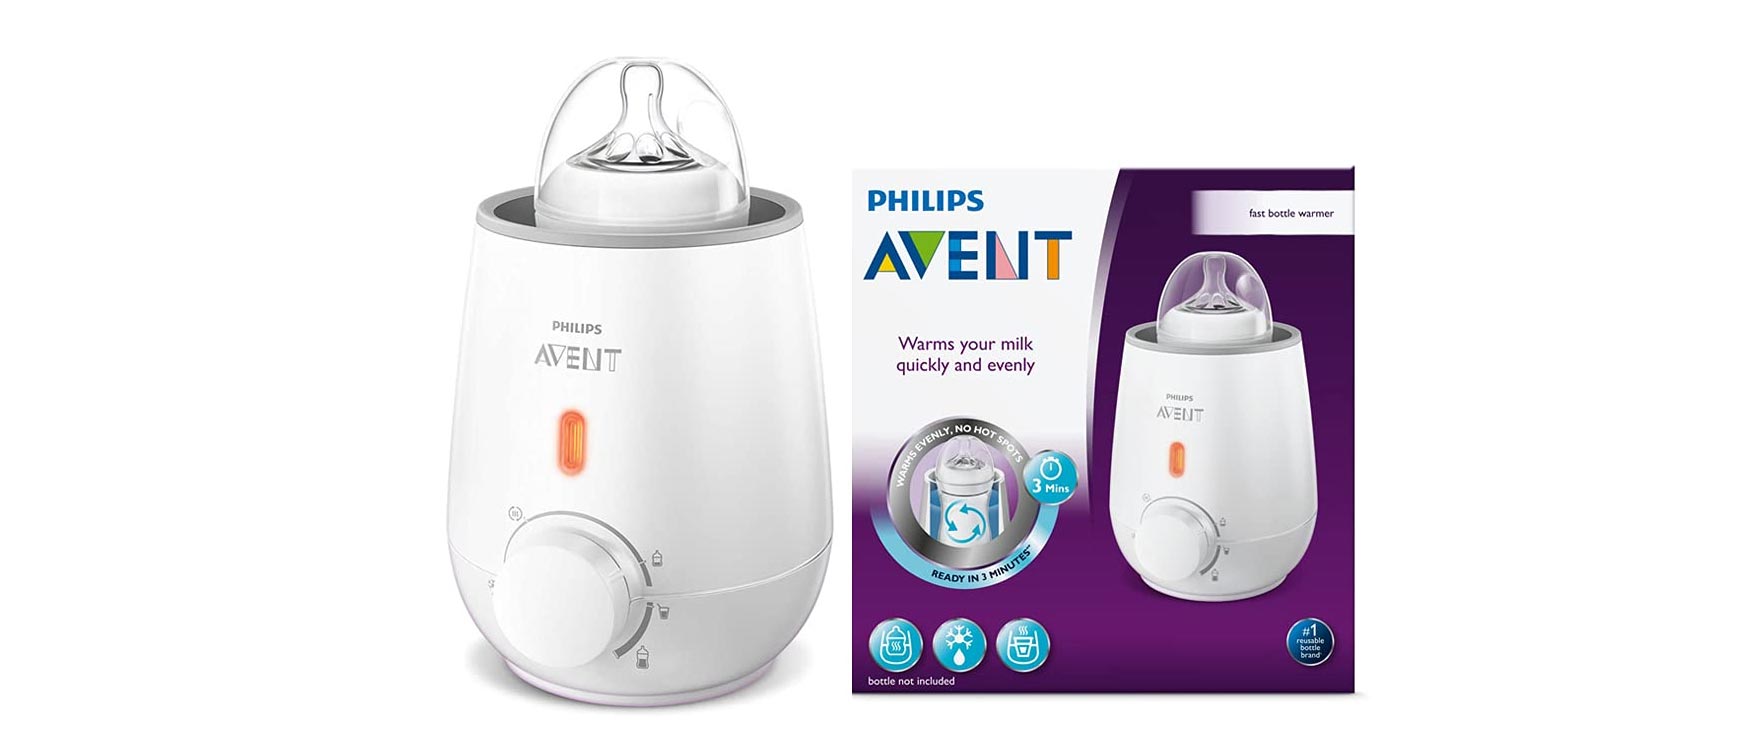 2. Philips Avent, Baby Bottle Warmer